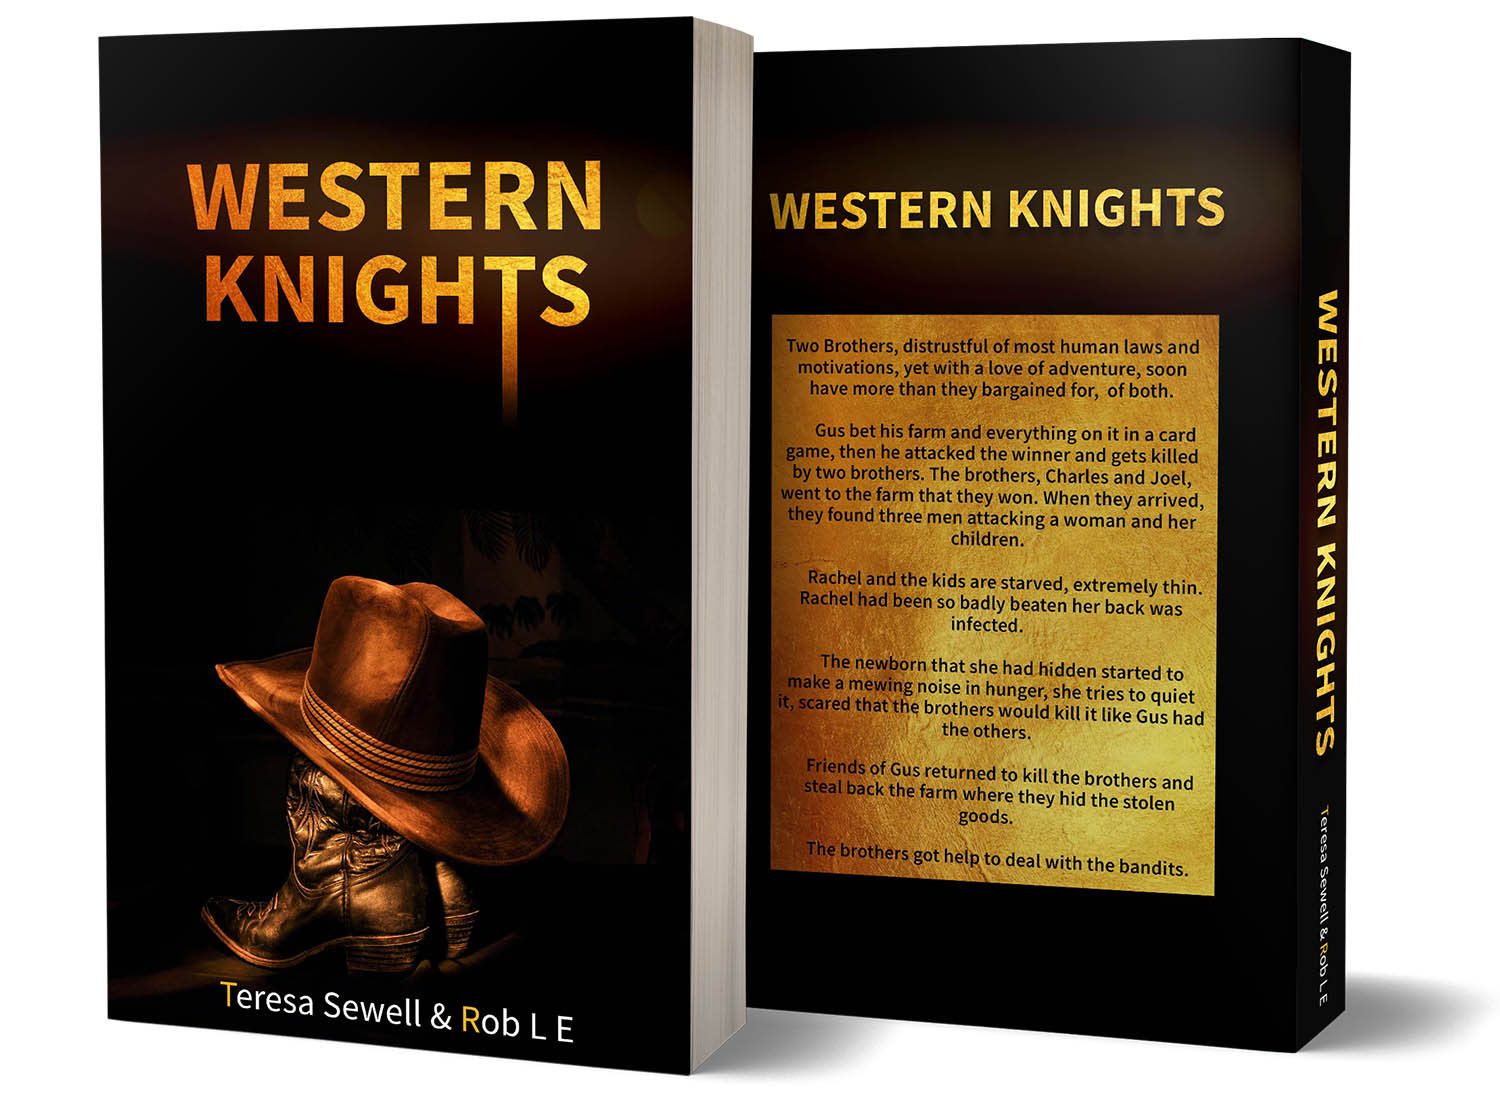 bookconsilio-portfolio-western-knights-paperback-bookcoverdesign